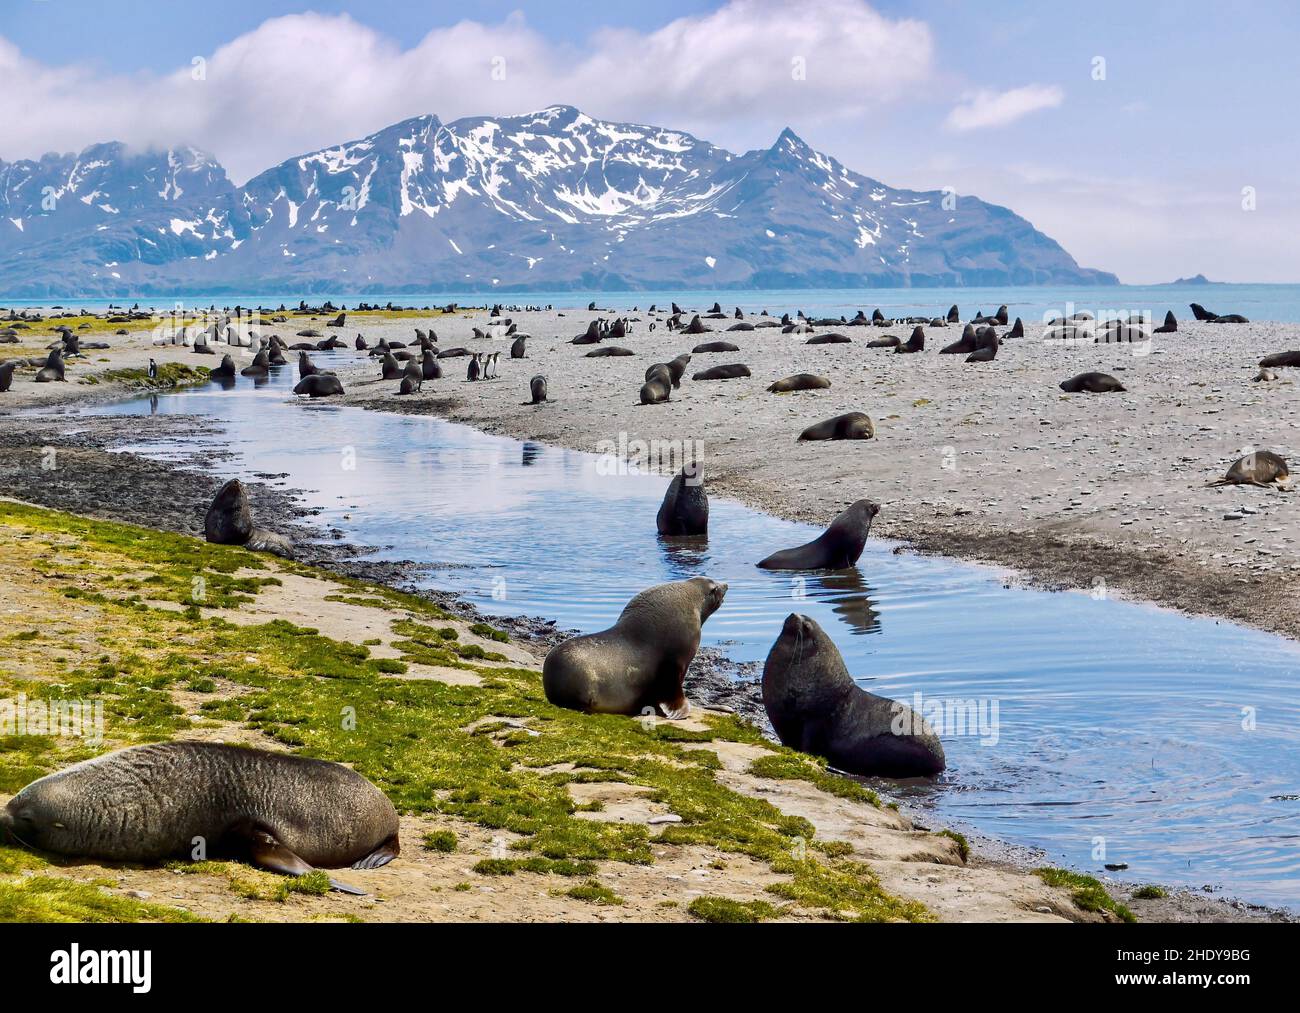 Colonies of Antarctic fur seals (Arctocephalus gazella) and king penguins (Aptenodytes patagonicus) on the beach near Salisbury Plain, South Georgia I Stock Photo